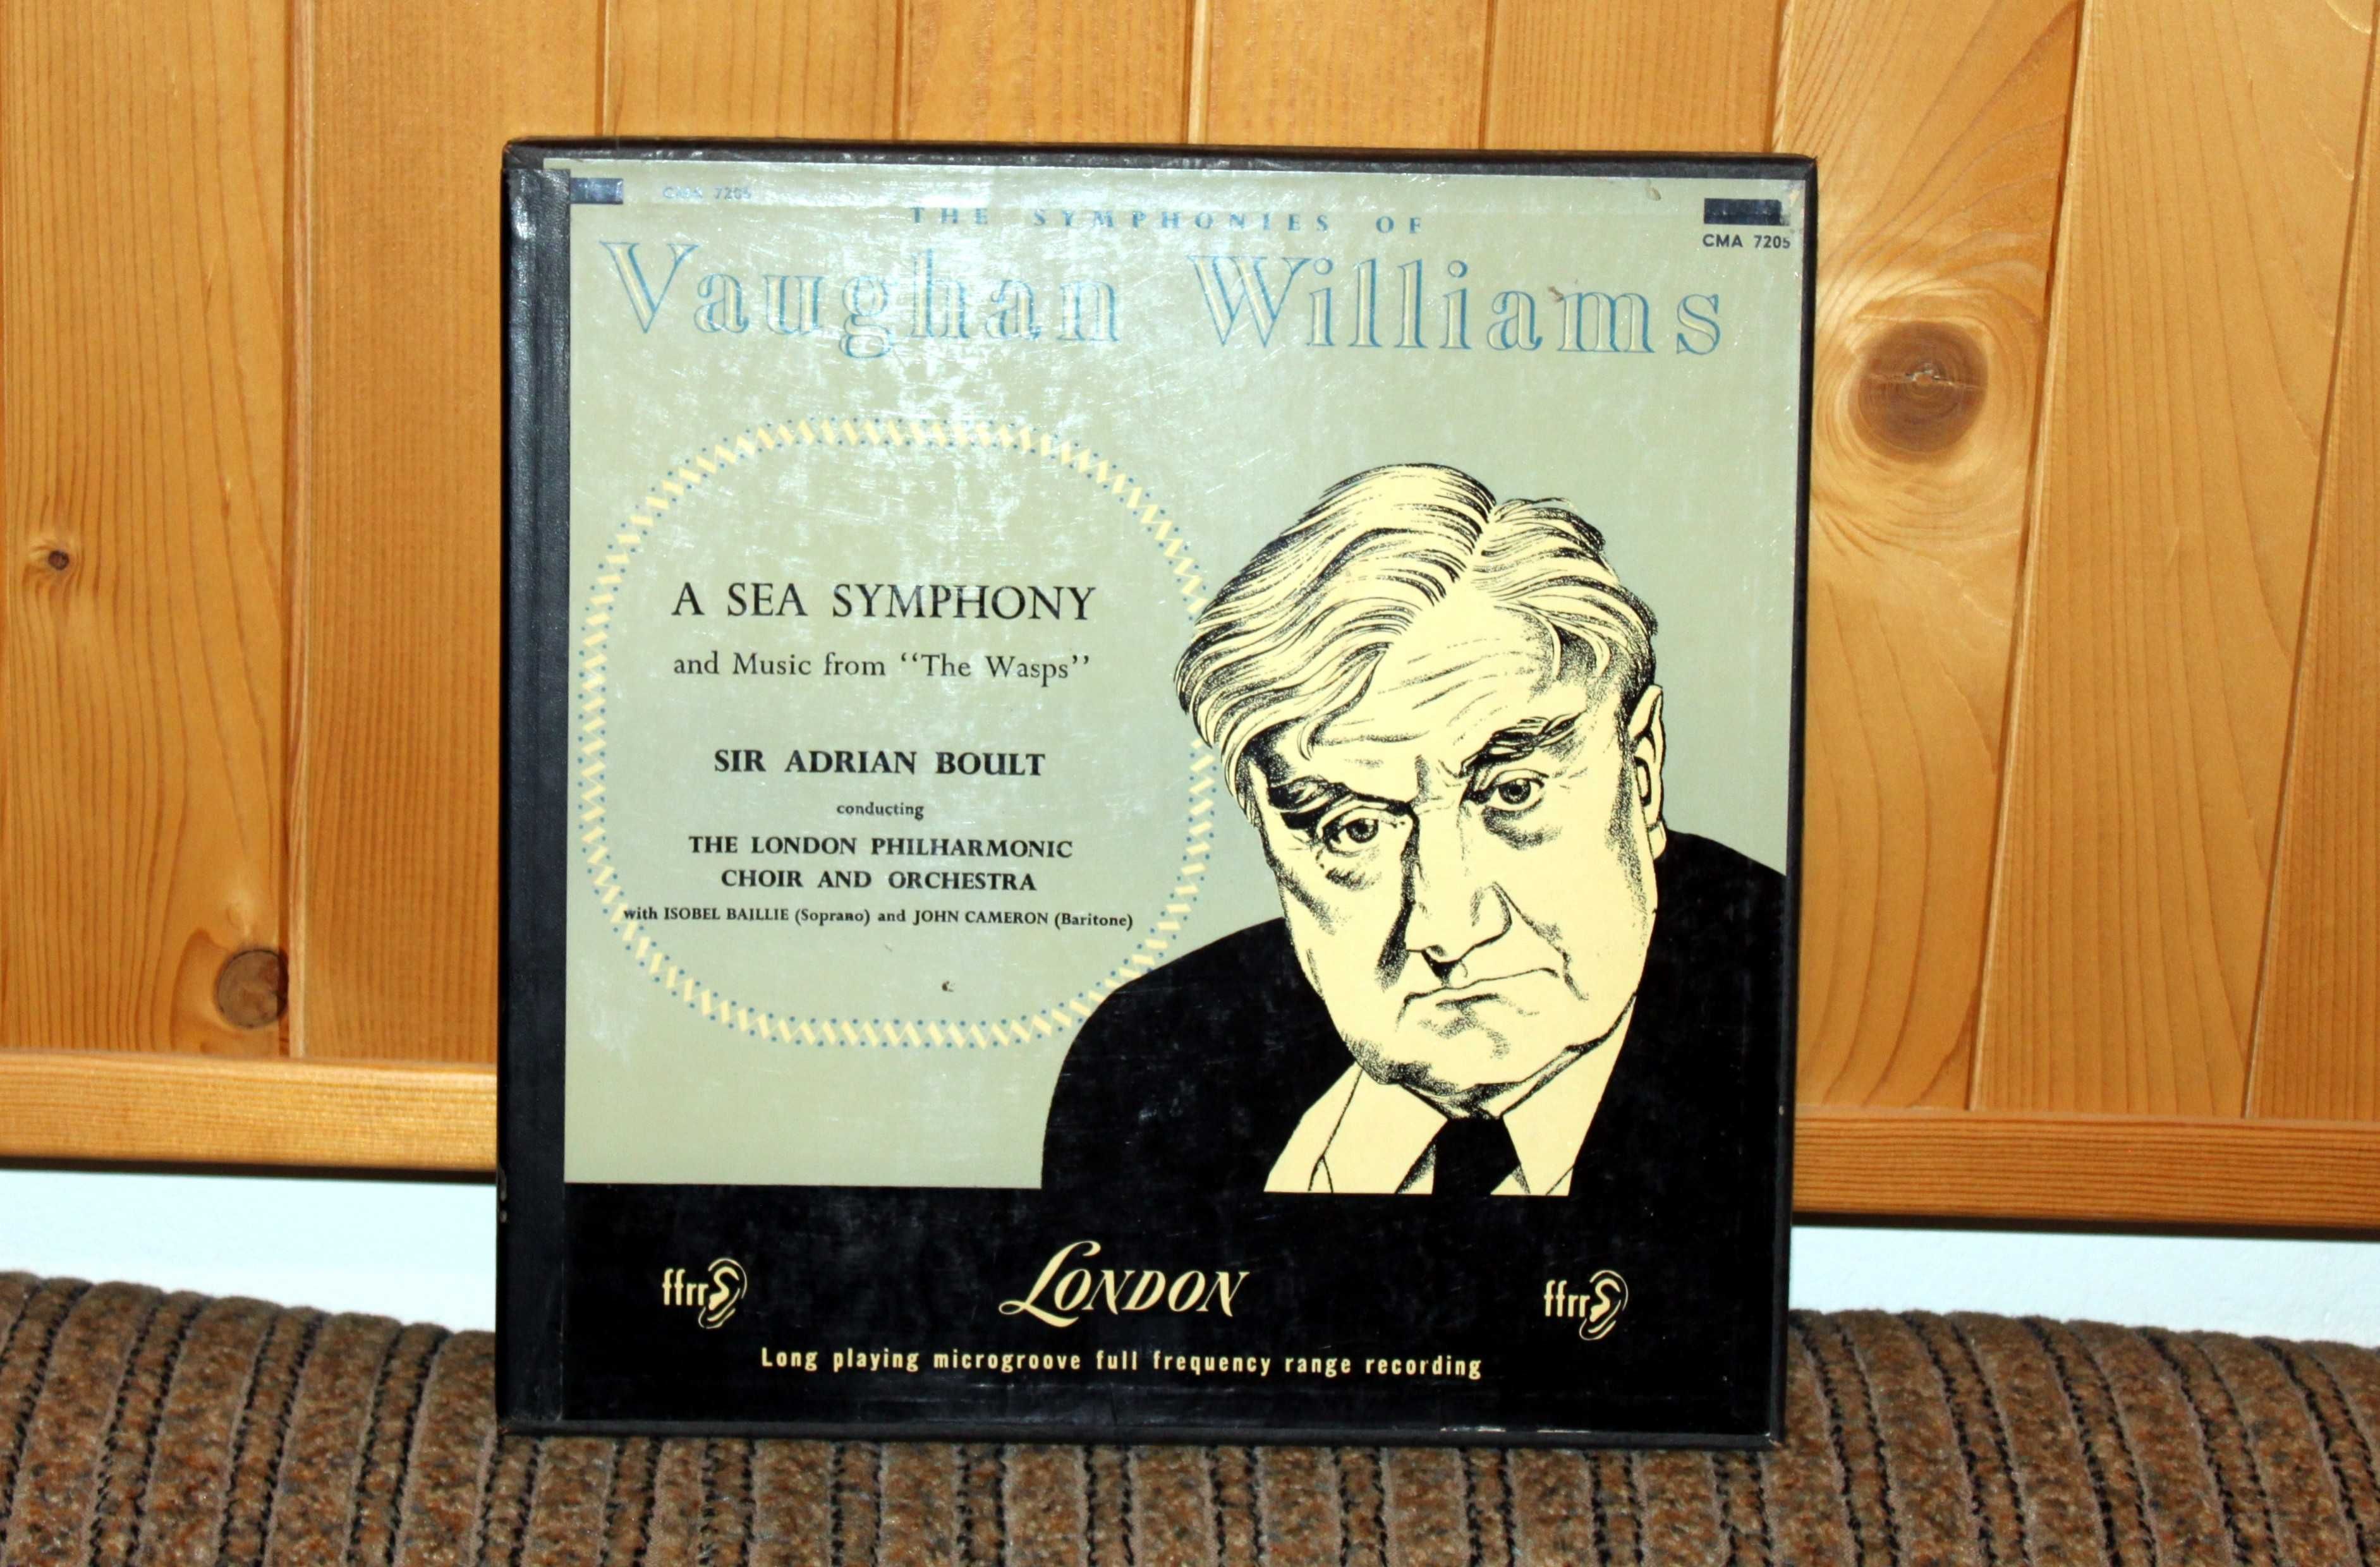 winyle - Vaughan Williams